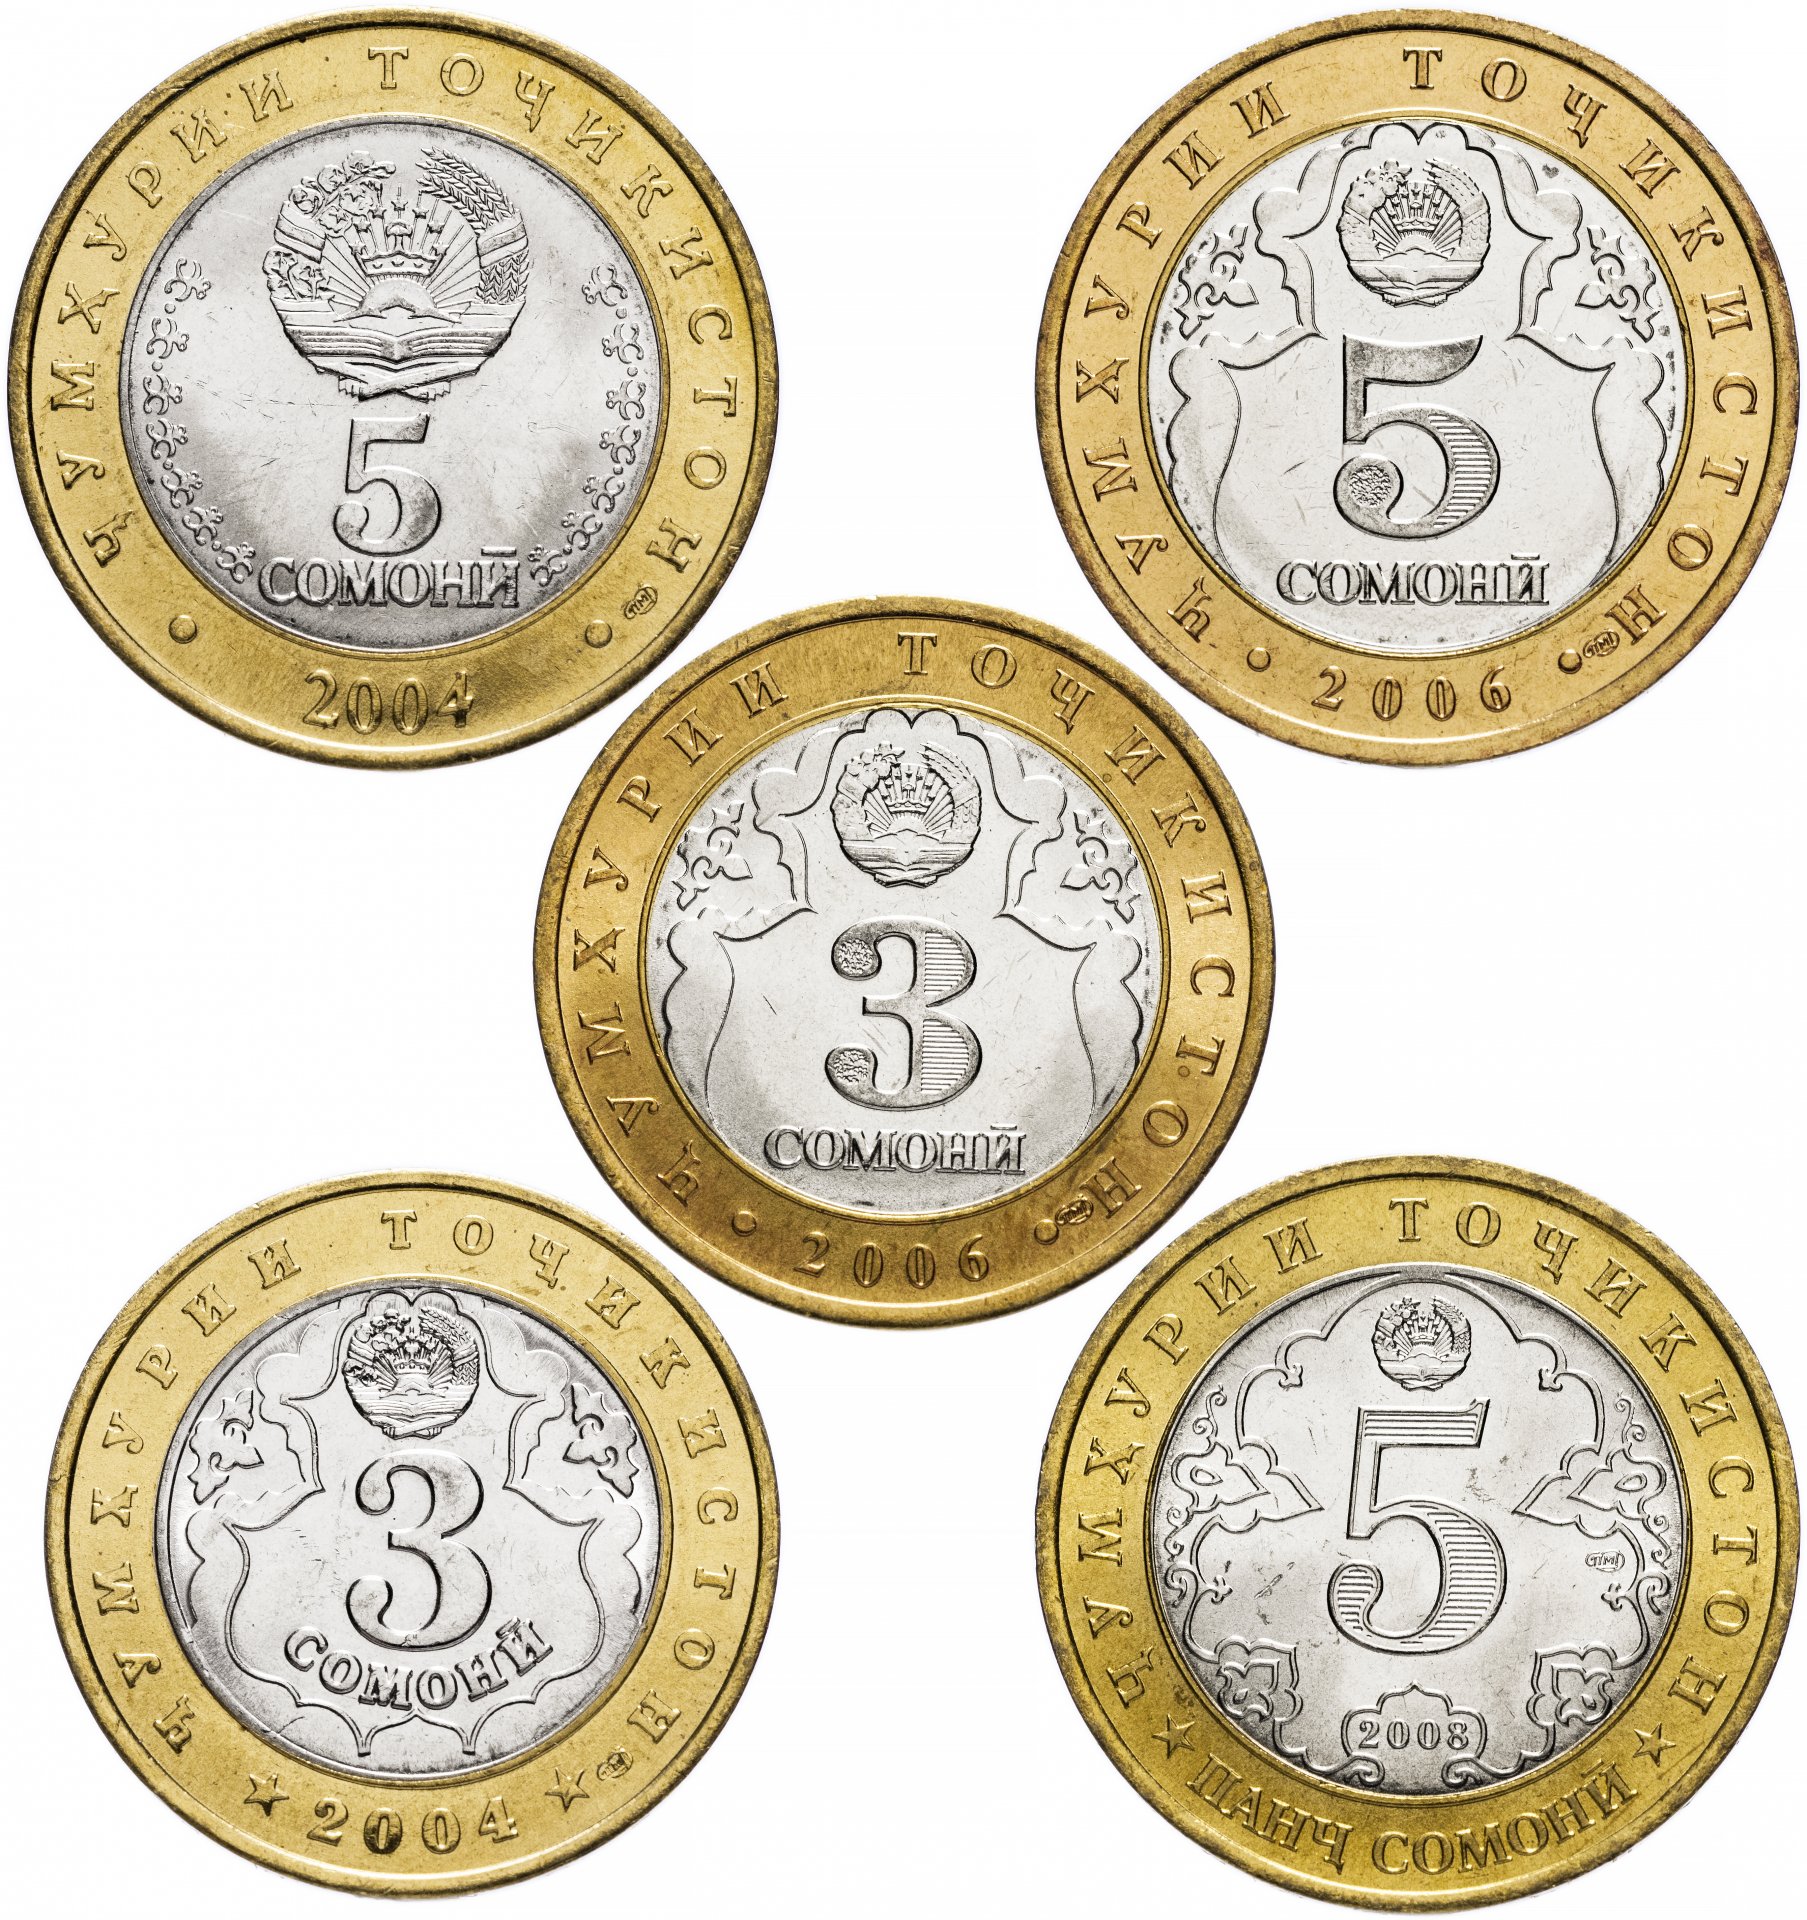 Сайт сбербанка монеты. Монетка Сомони. Юбилейные монеты Сбербанка. Золотые монеты Таджикистана. Набор юбилейных монет Сбербанк.